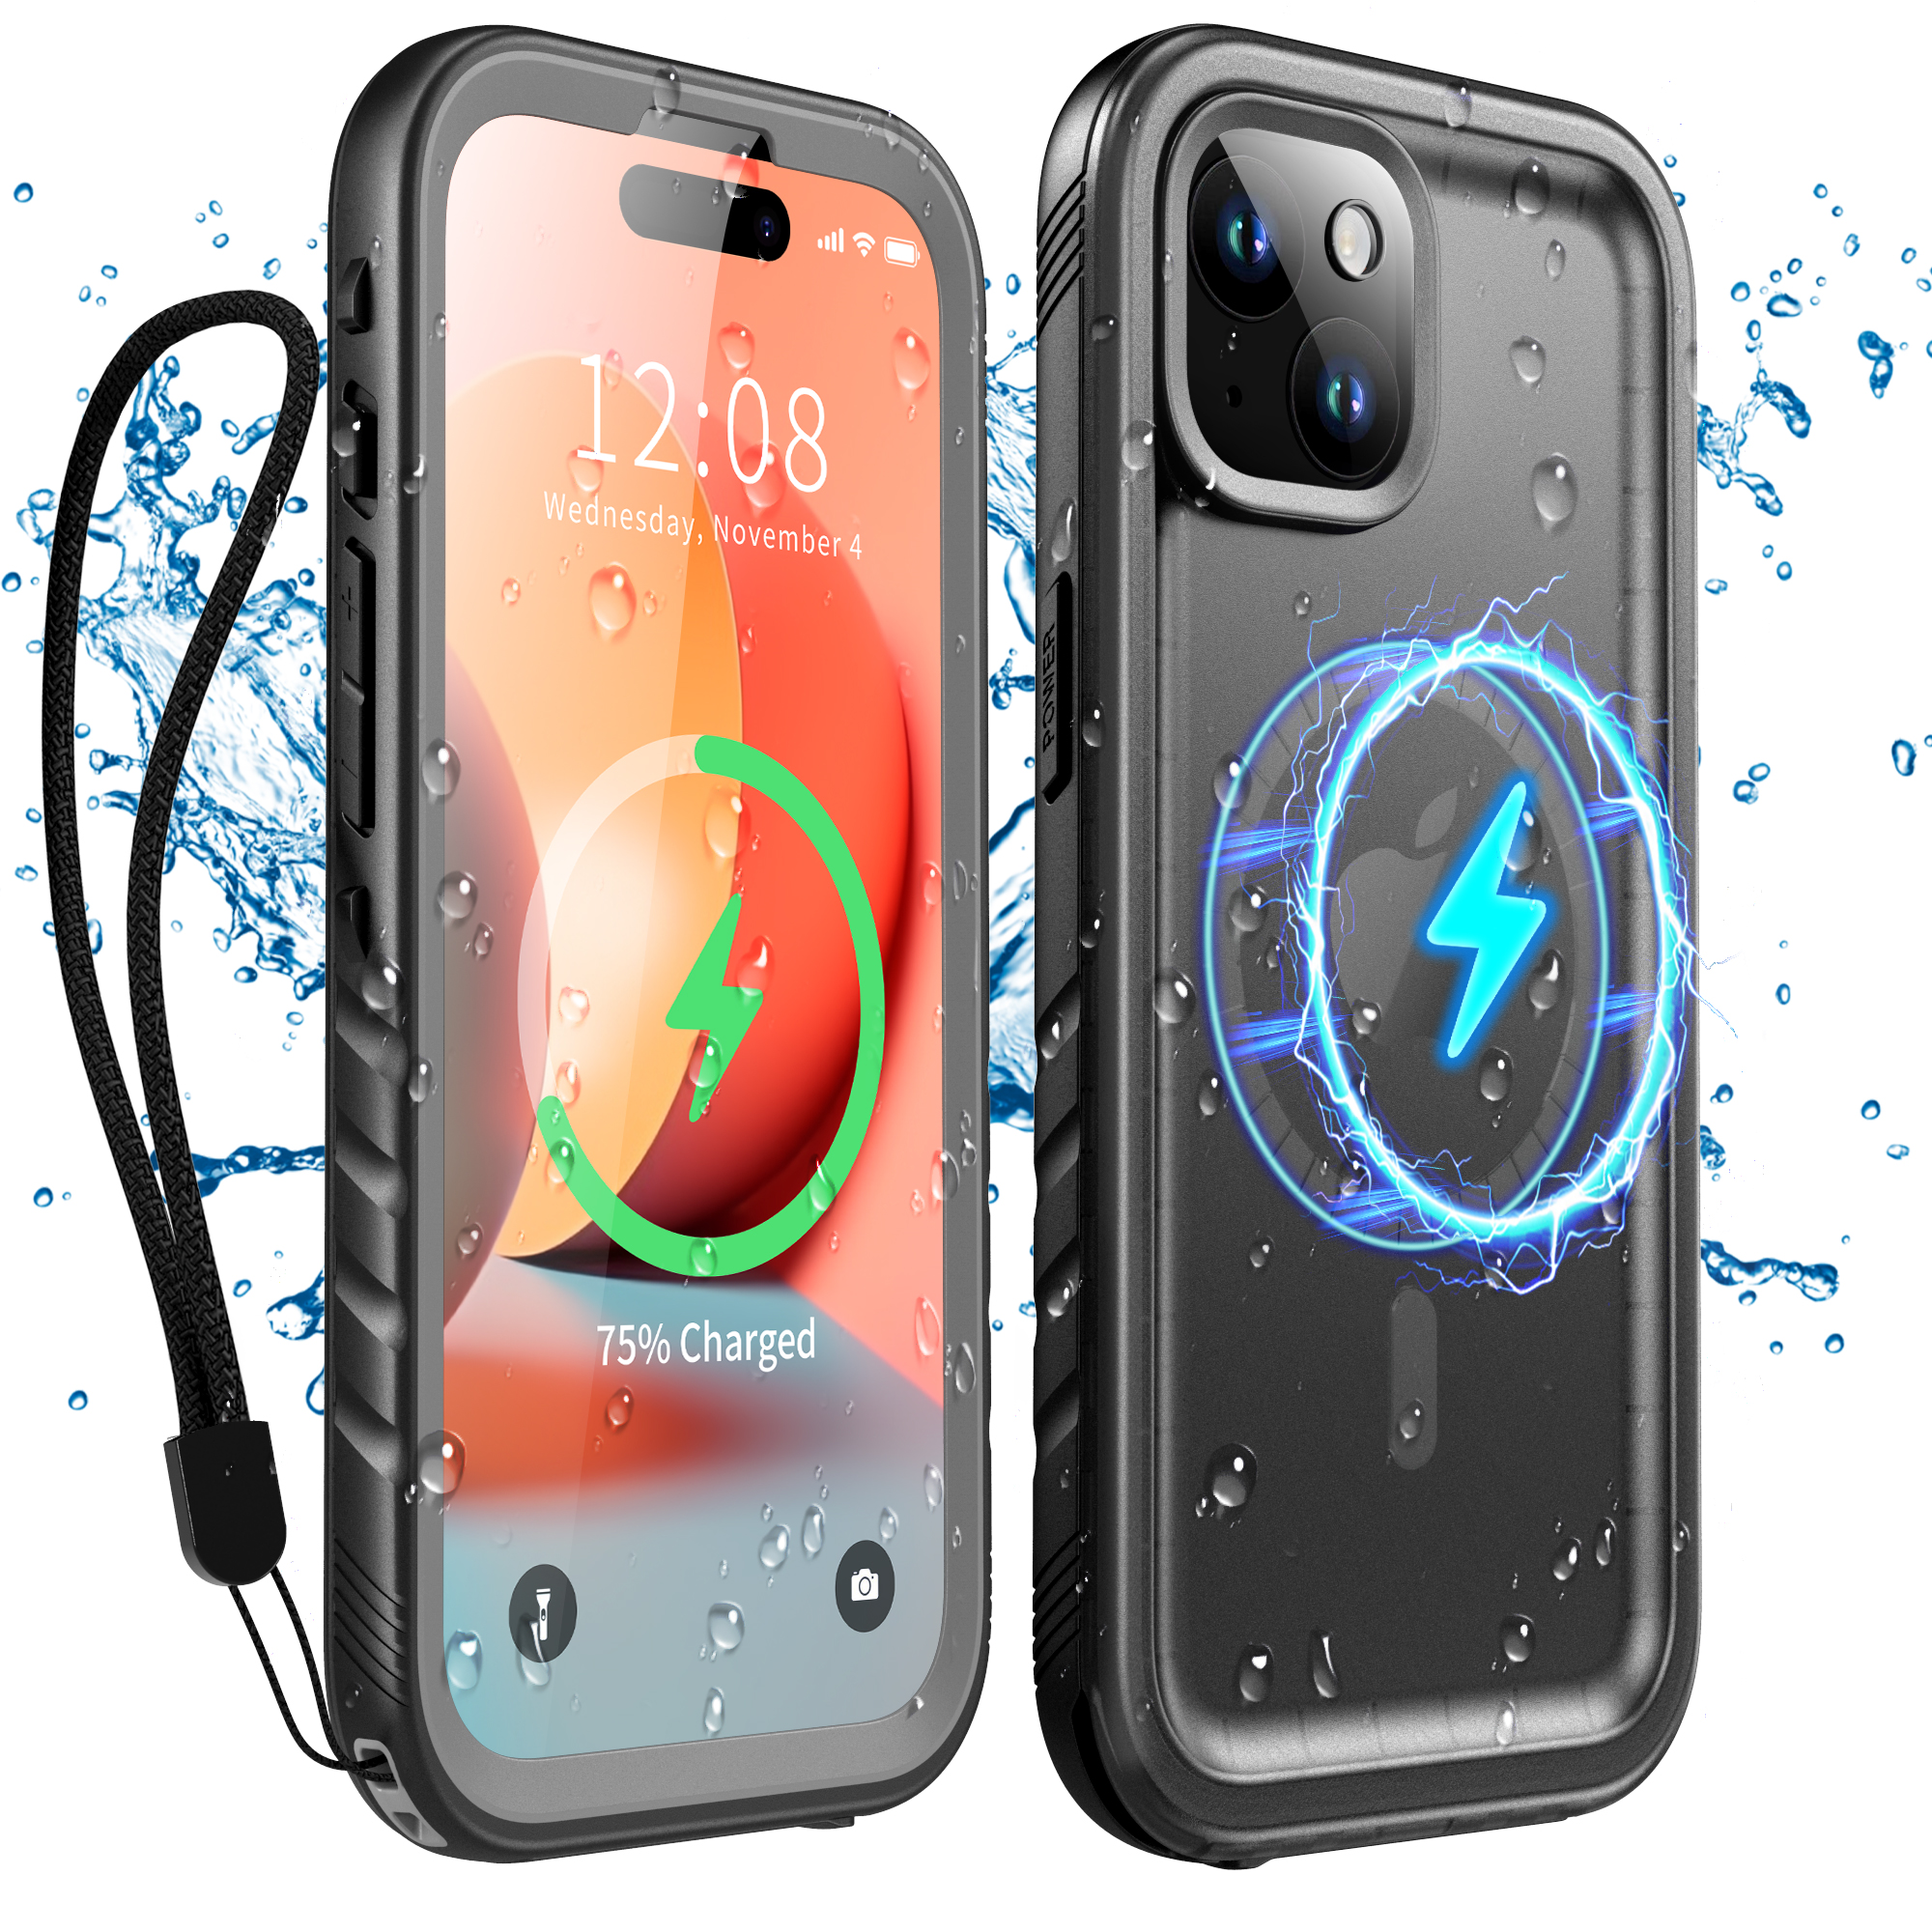 SPORTLINK Metal Bike Phone Mount - Bicycle Handlebars Phone Holder for  iPhone 13 Pro Max with Waterproof Case, Dropproof Dustproof Adjustable  Sturdy